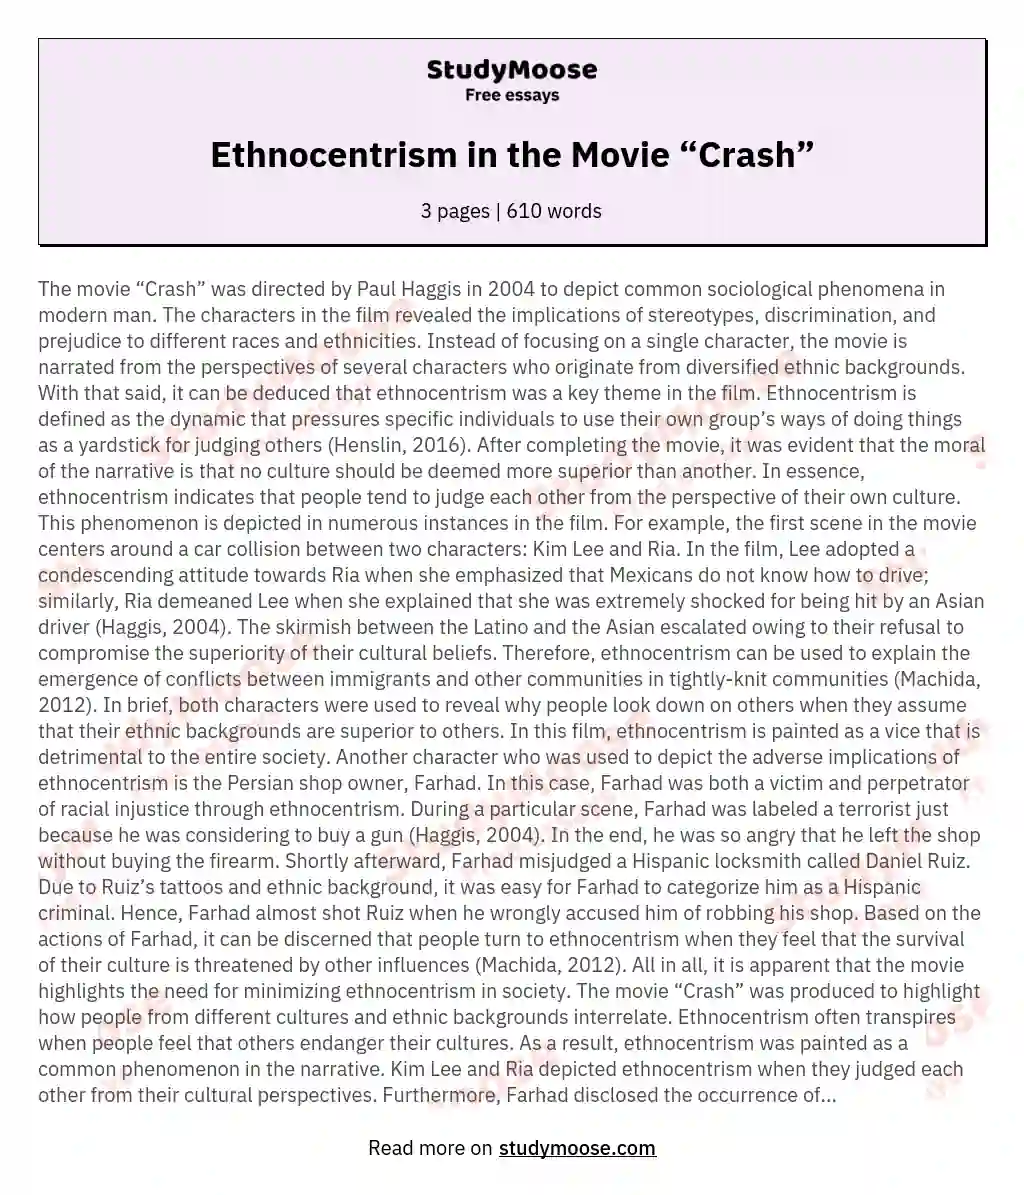 Ethnocentrism in the Movie “Crash” essay